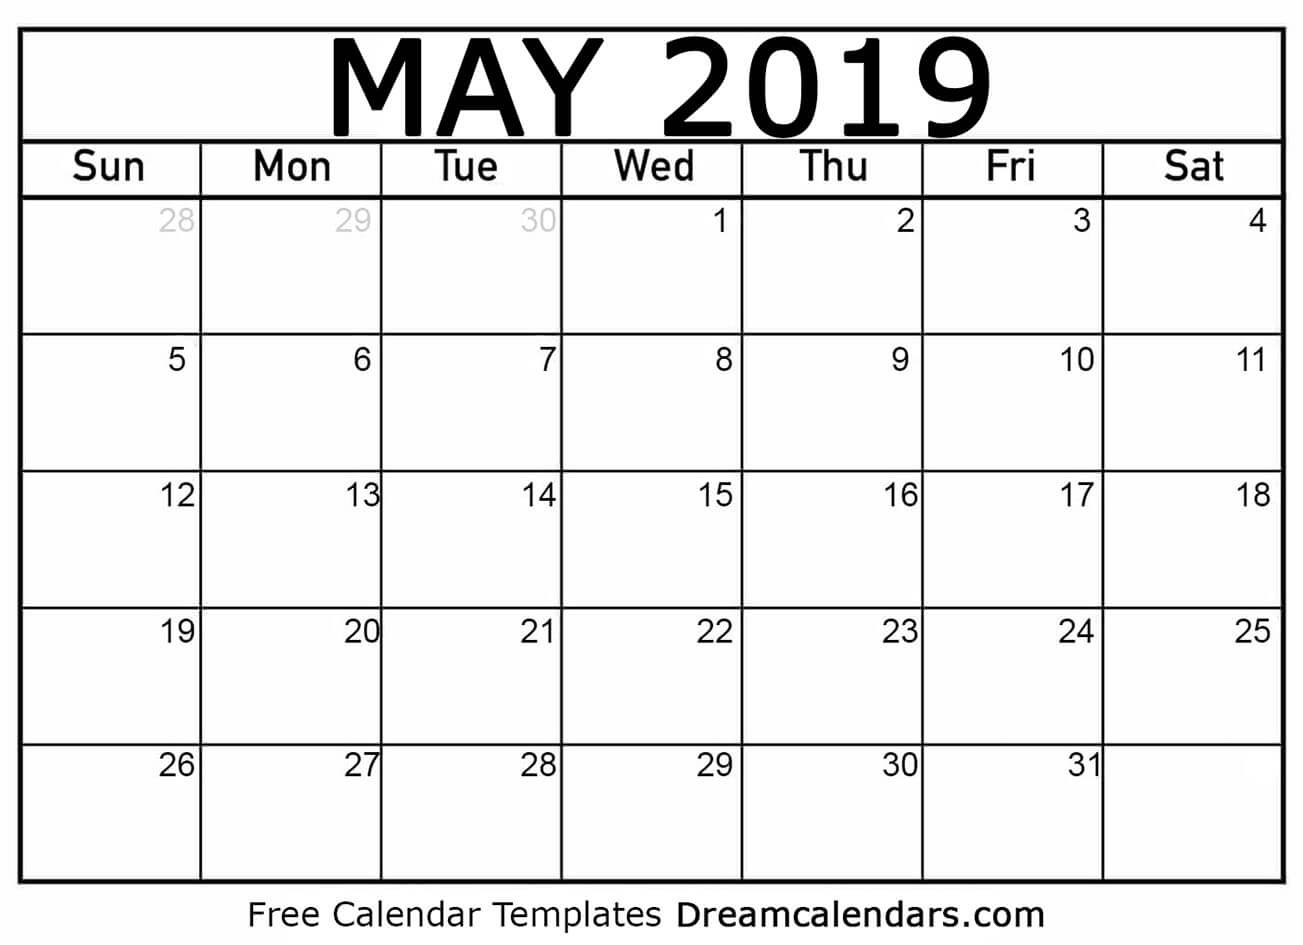 Dream Calendars Make your calendar template blog Blank Printable May